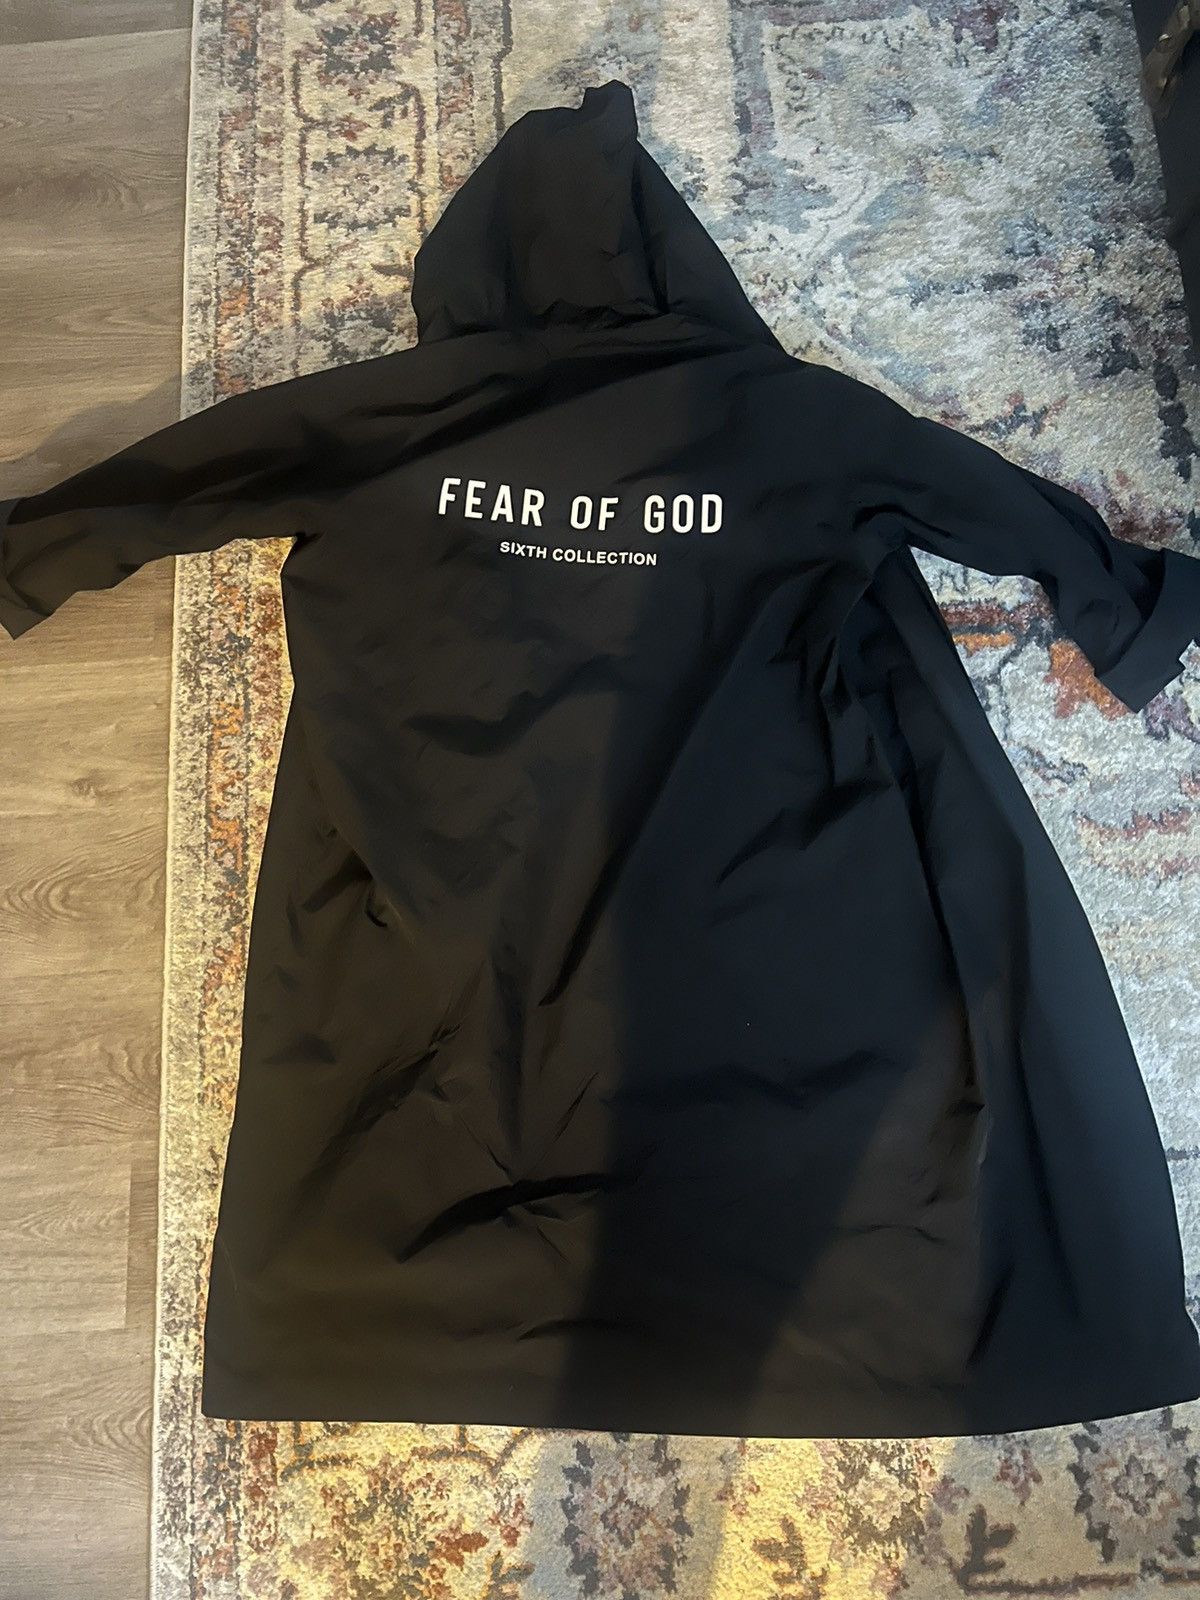 Fear of God Fear of God Nylon Hooded Raincoat - Sixth Collection